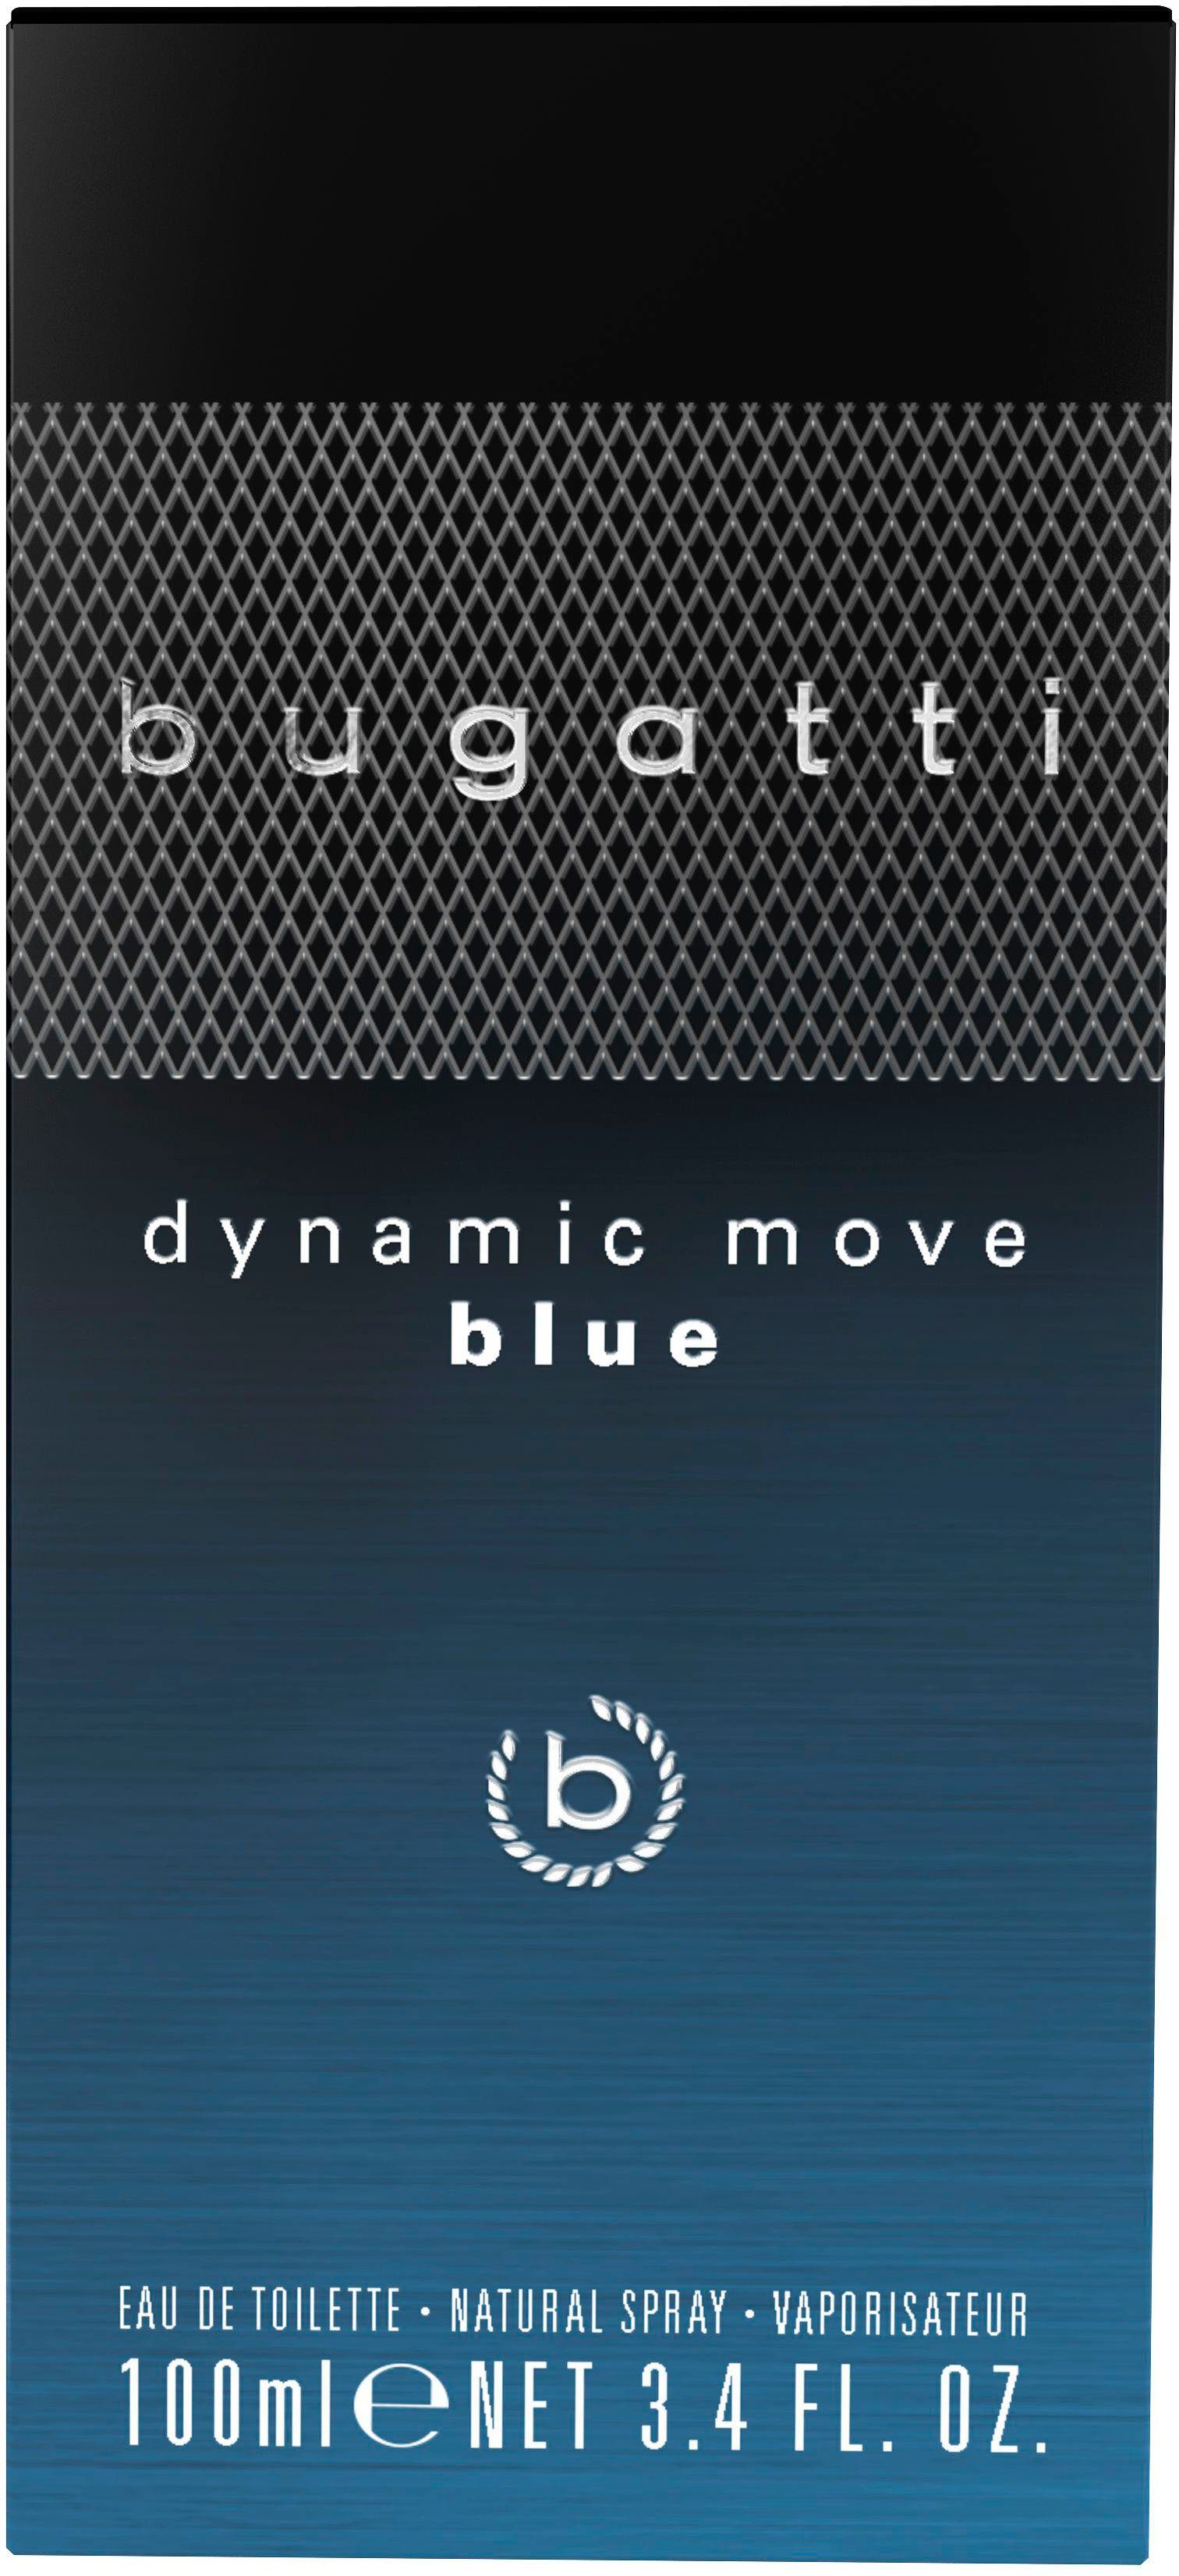 EdT Dynamic de bugatti 100ml Move Toilette Blue Eau